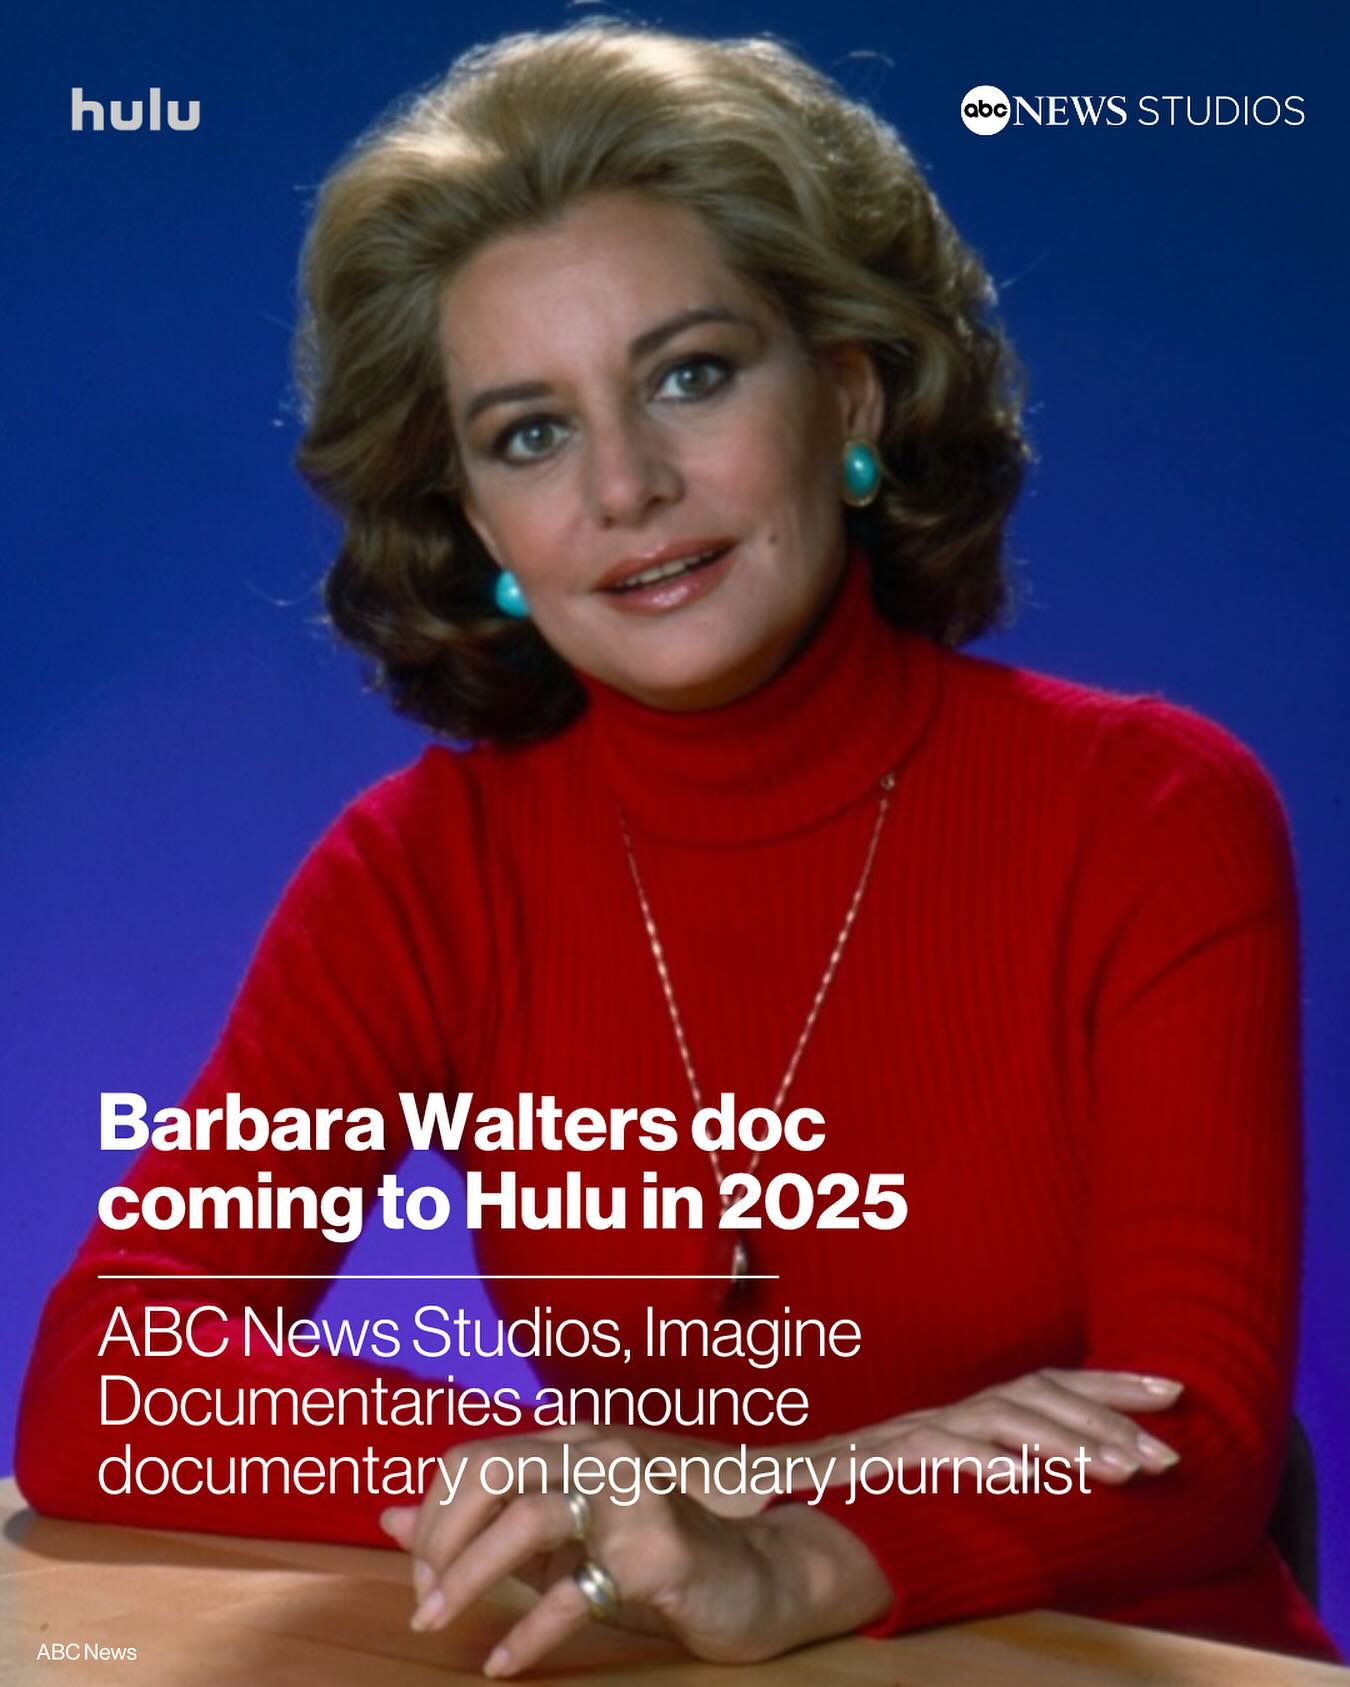 ABC News Studios Announces the Definitive Documentary on Legendary Journalist Barbara Walters